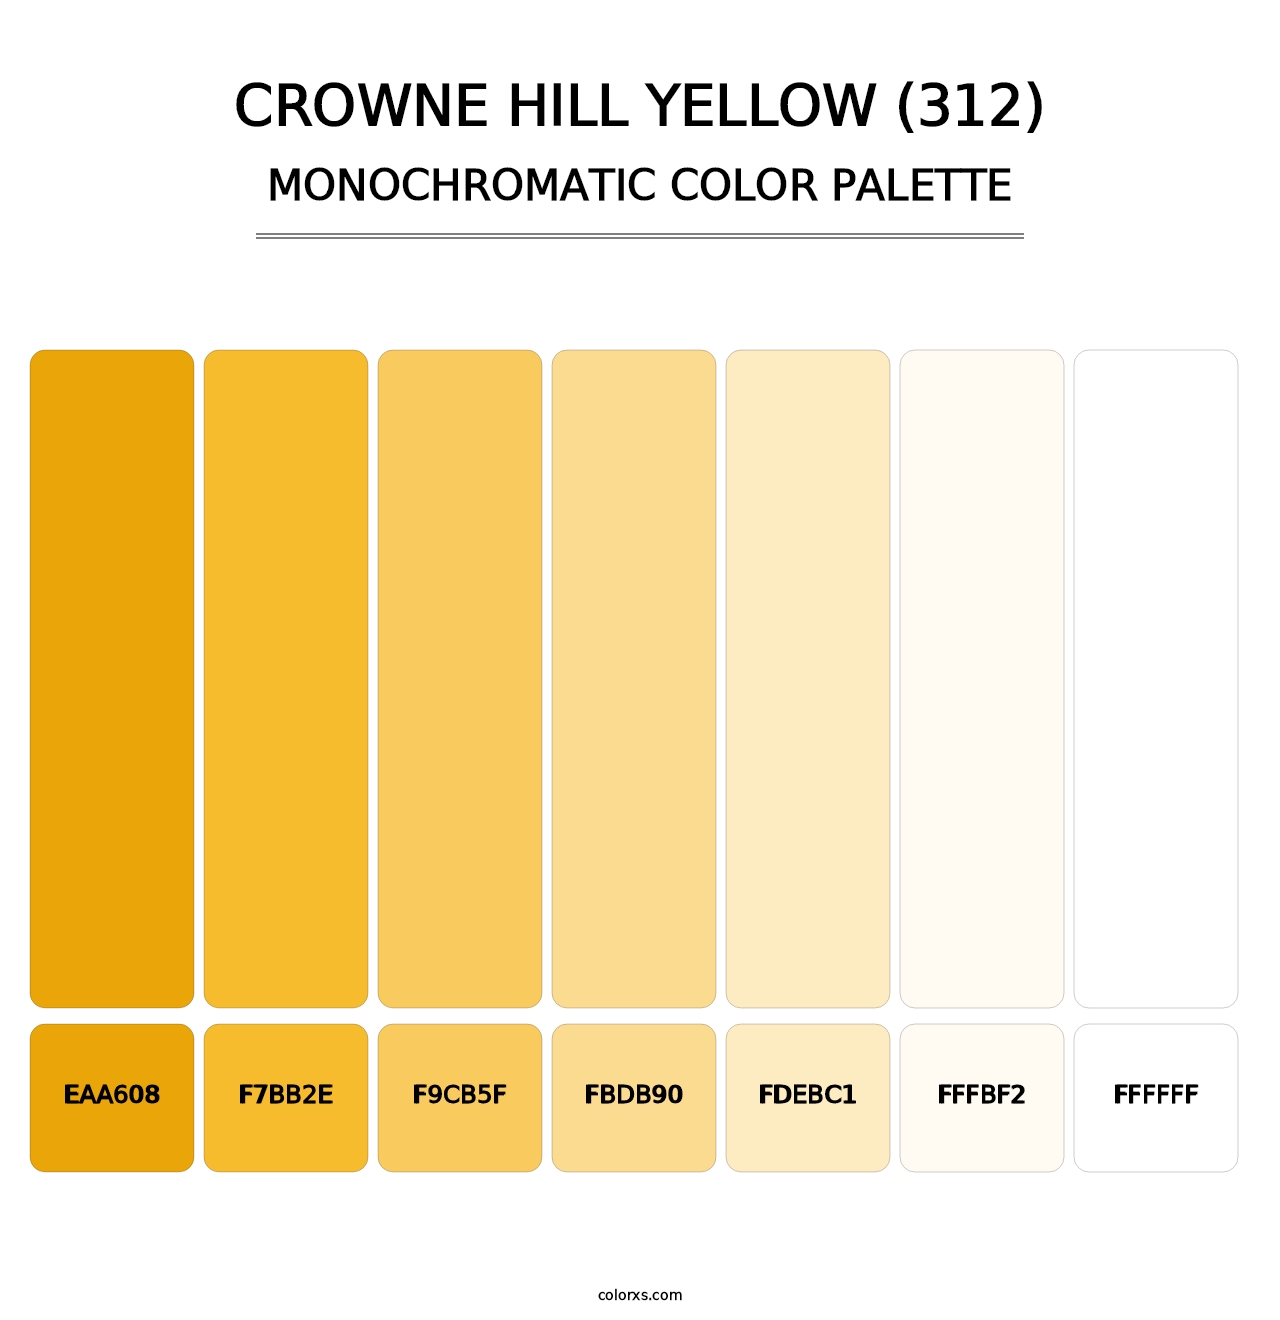 Crowne Hill Yellow (312) - Monochromatic Color Palette